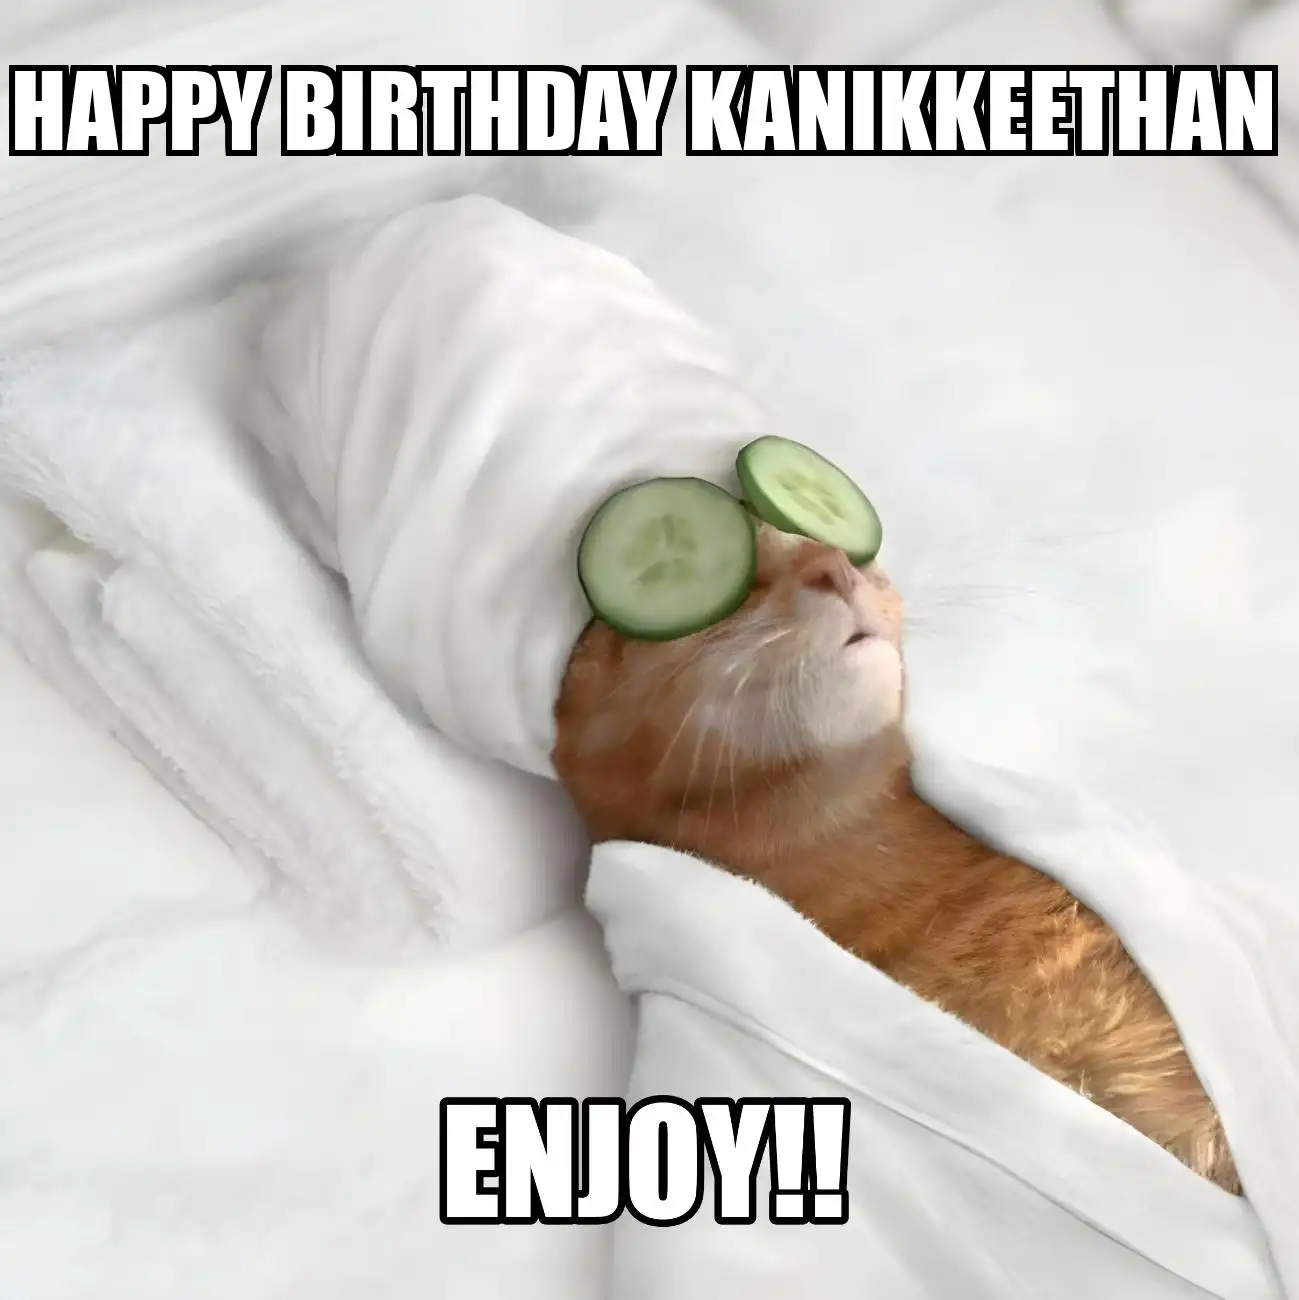 Happy Birthday Kanikkeethan Enjoy Cat Meme